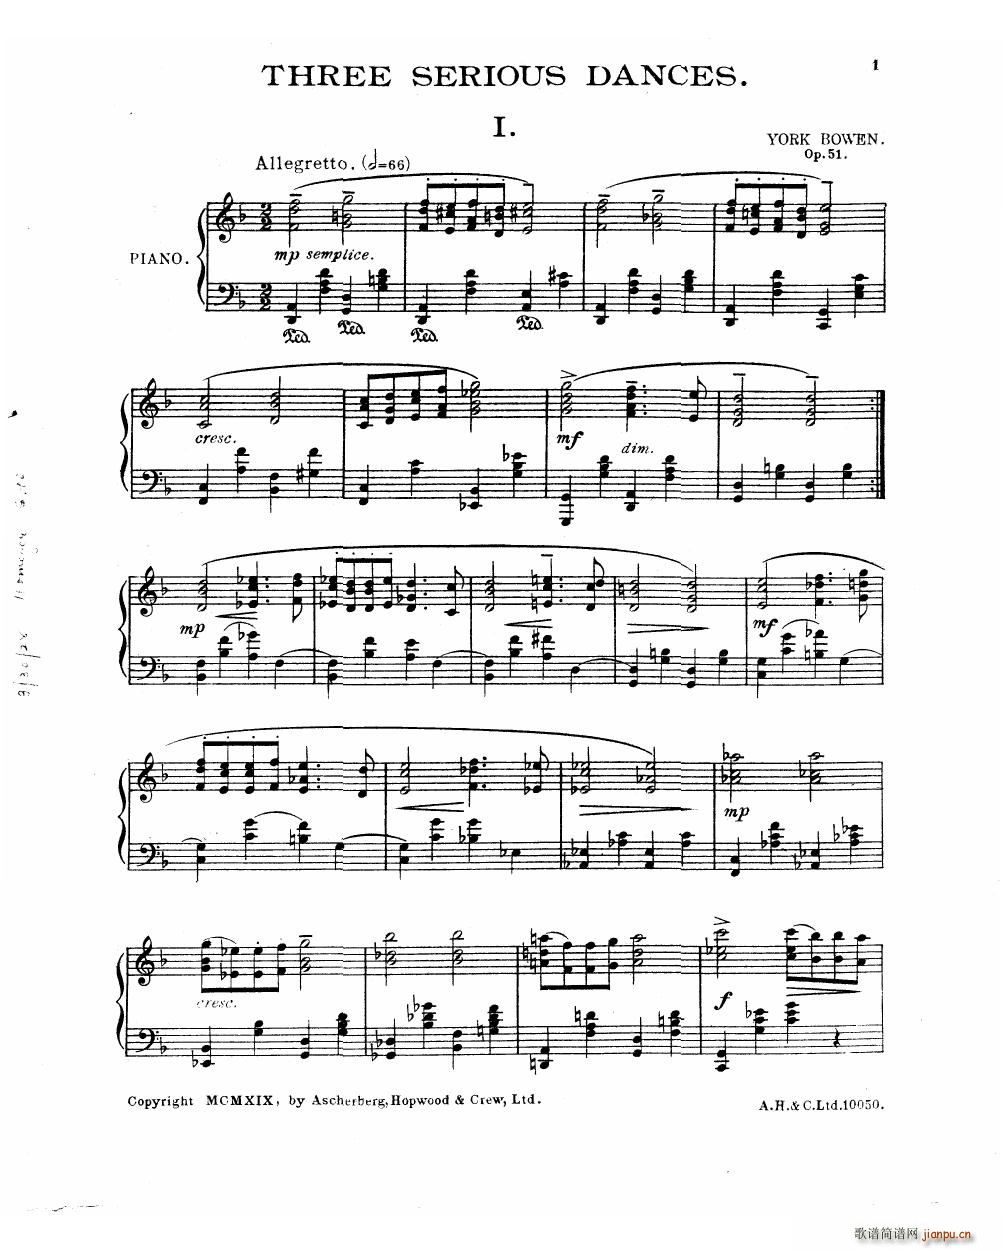 Bowen Serious Dances for piano Op 51()3